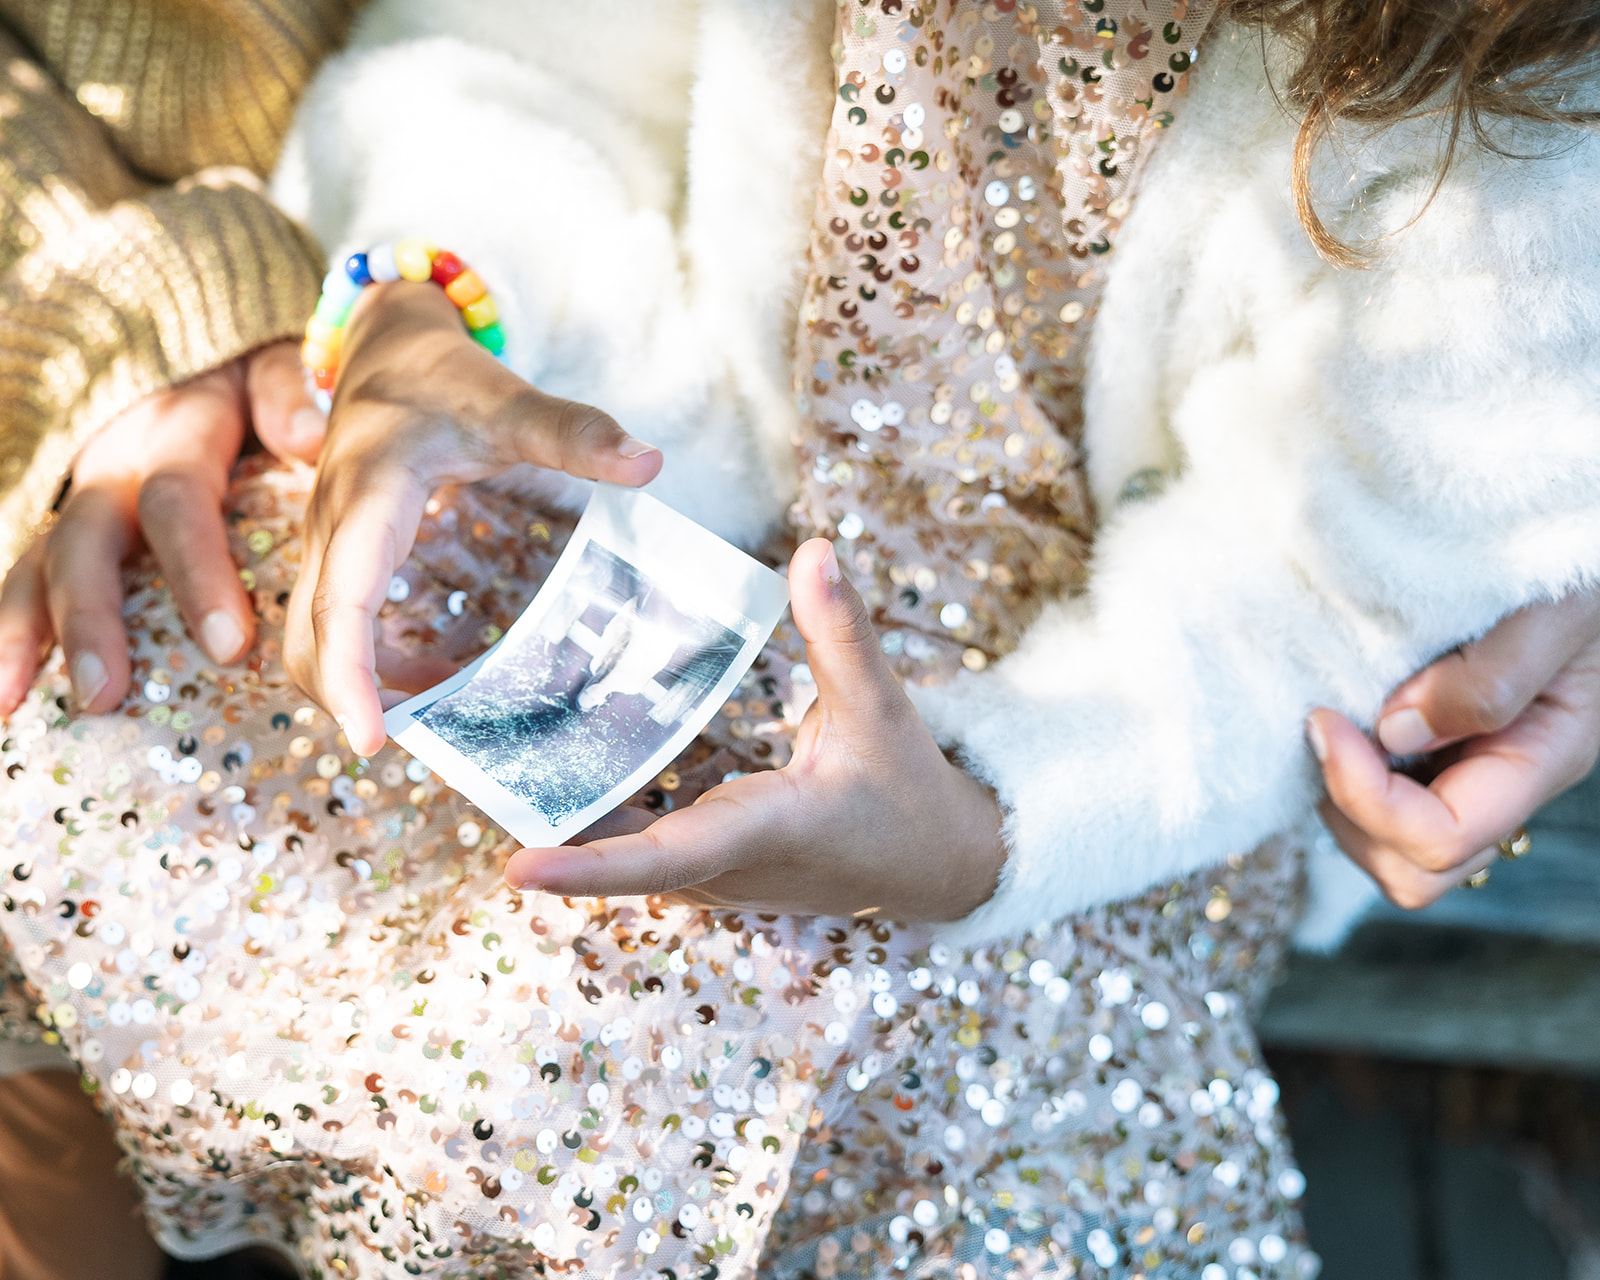 Little girl holding a polaroid photo